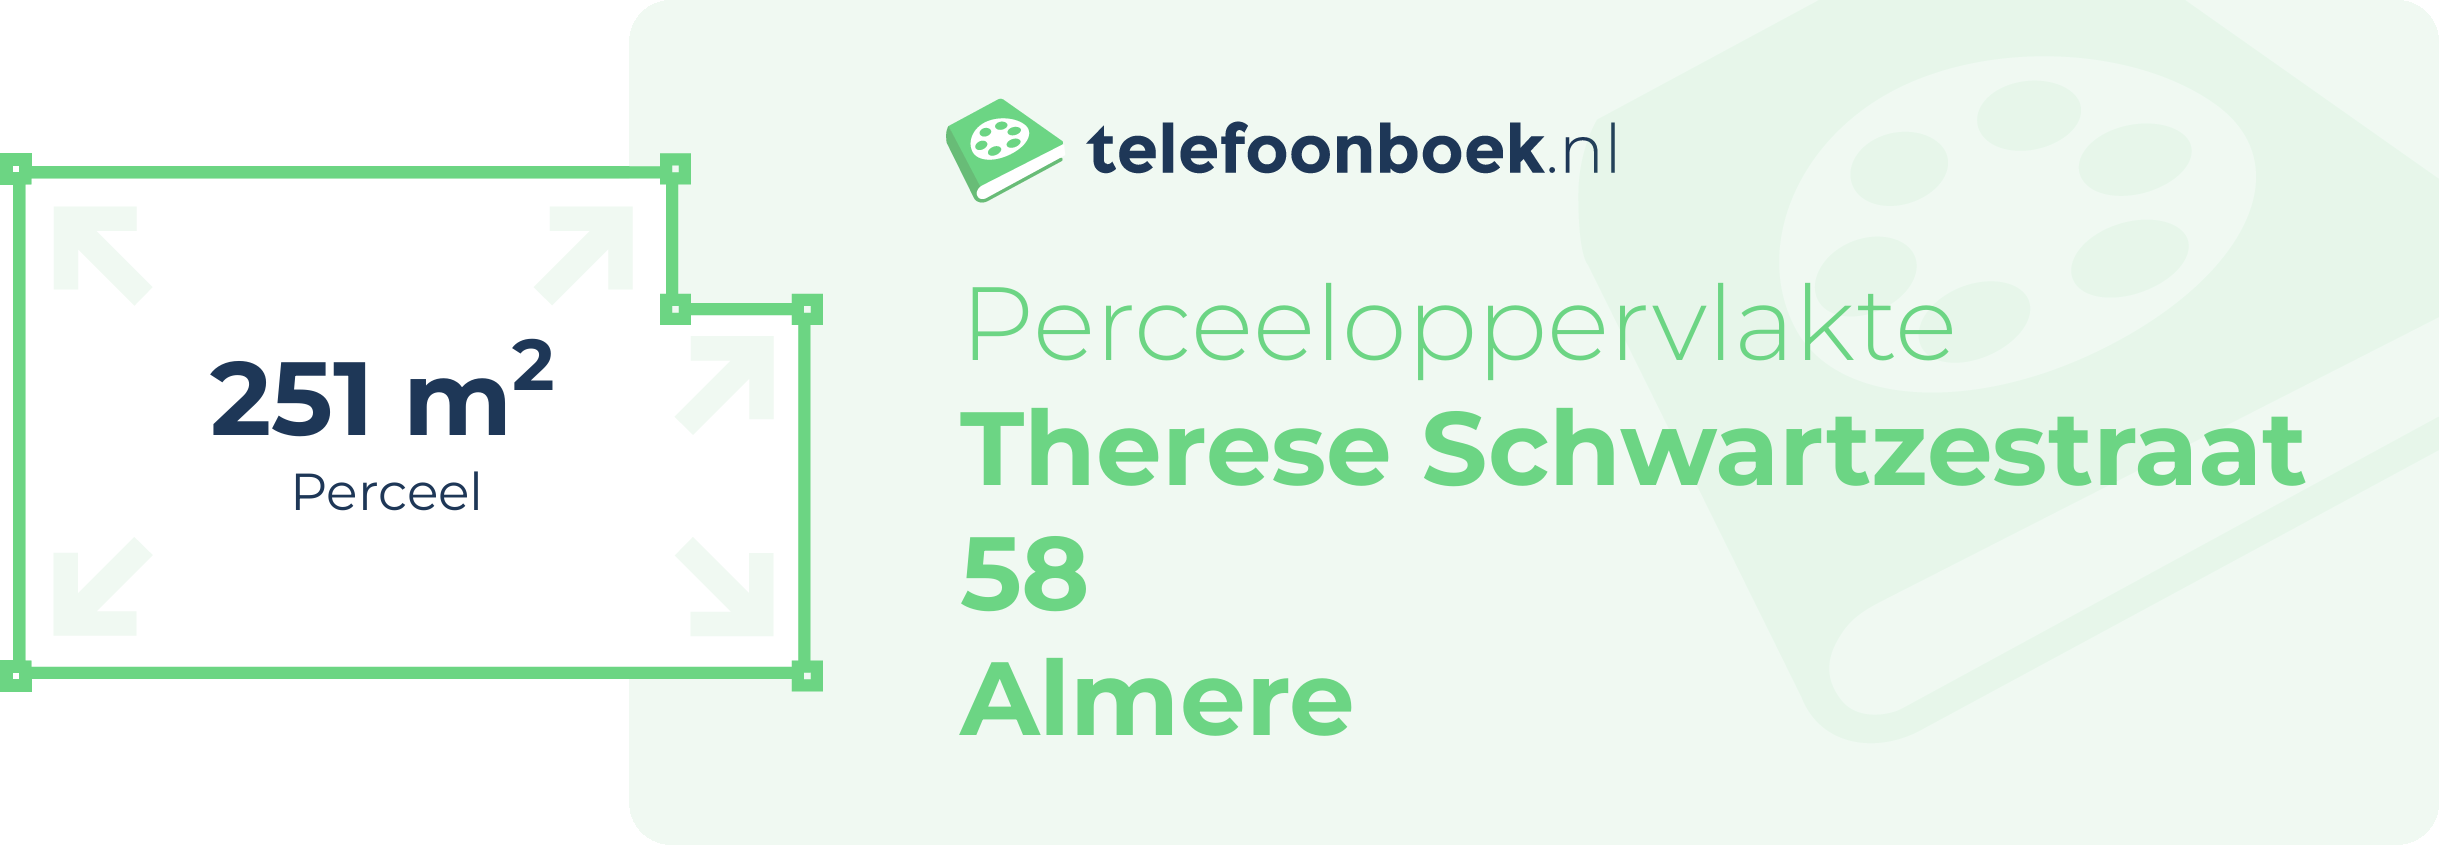 Perceeloppervlakte Therese Schwartzestraat 58 Almere